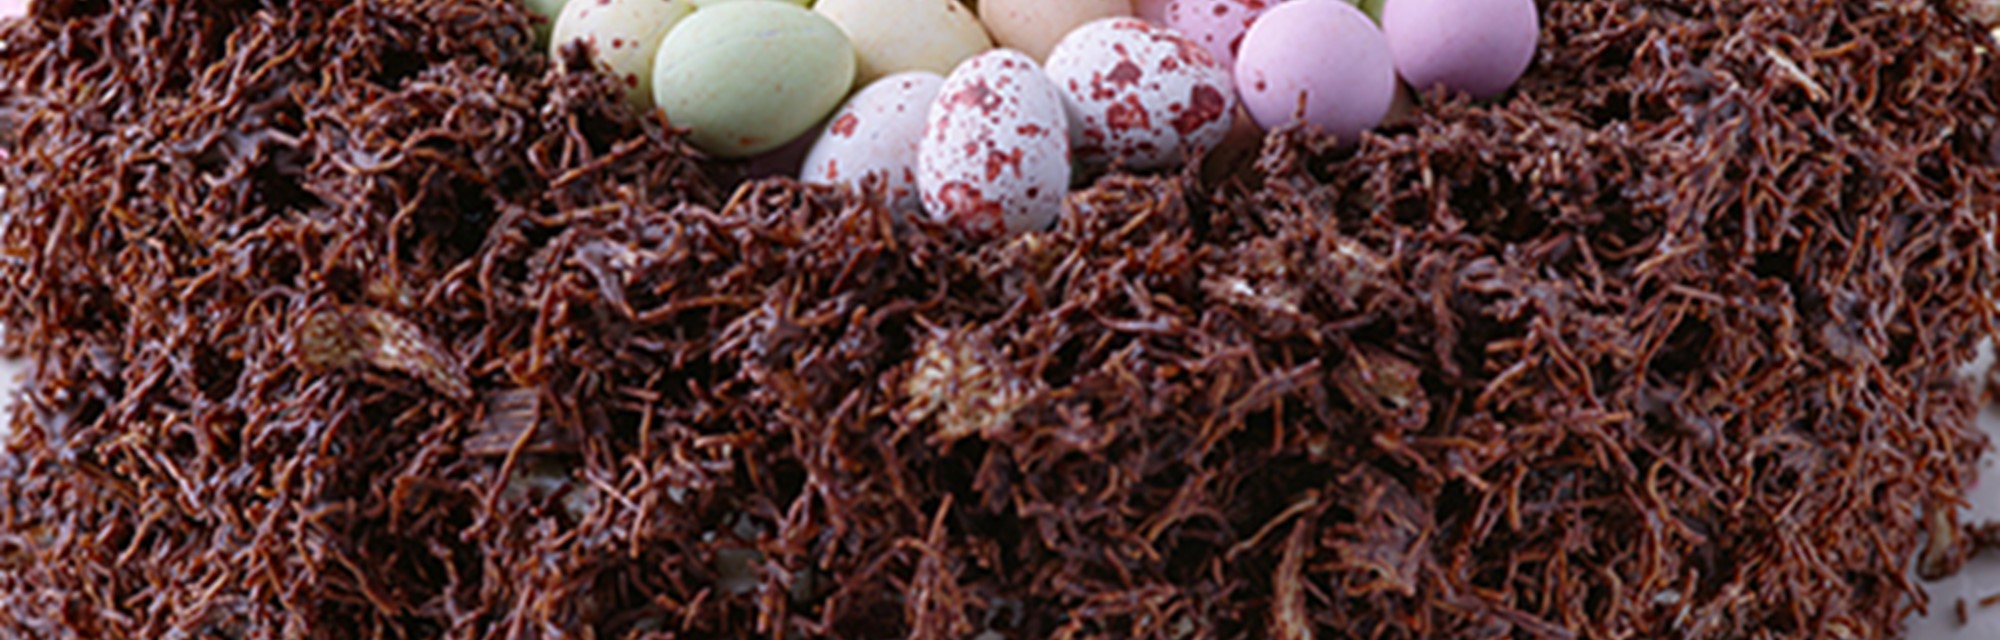 Chocolate Easter nest cake